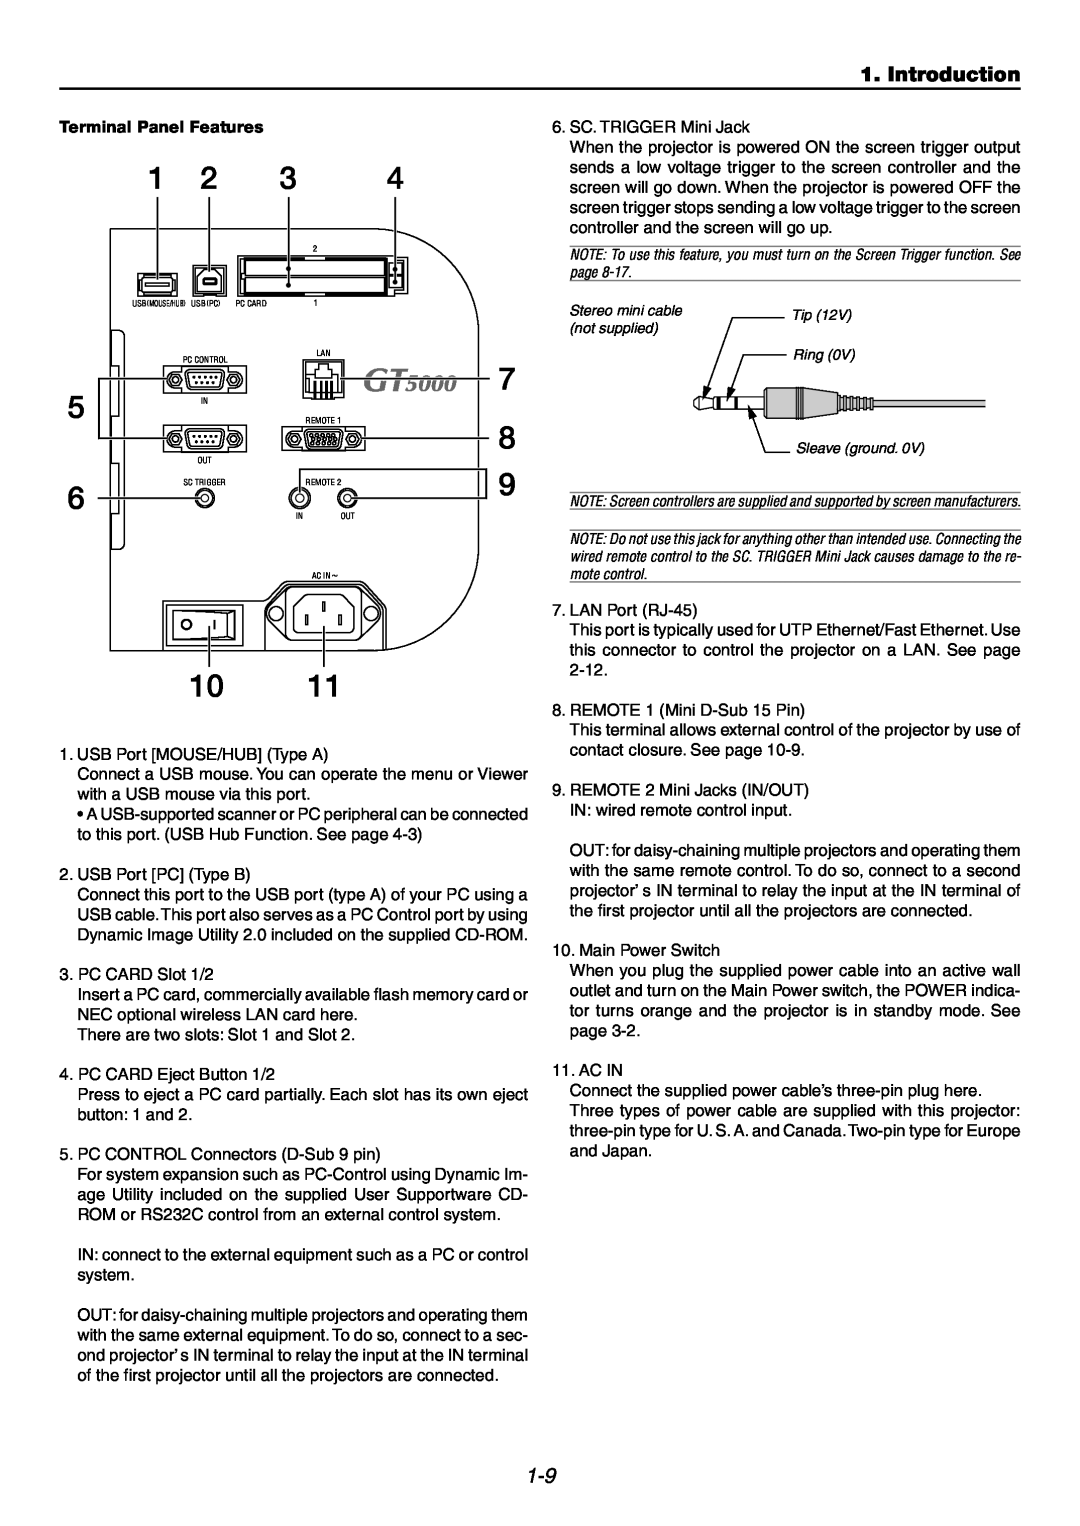 NEC GT6000 user manual 7 8, 1011, Introduction, 6.SC. TRIGGER Mini Jack 